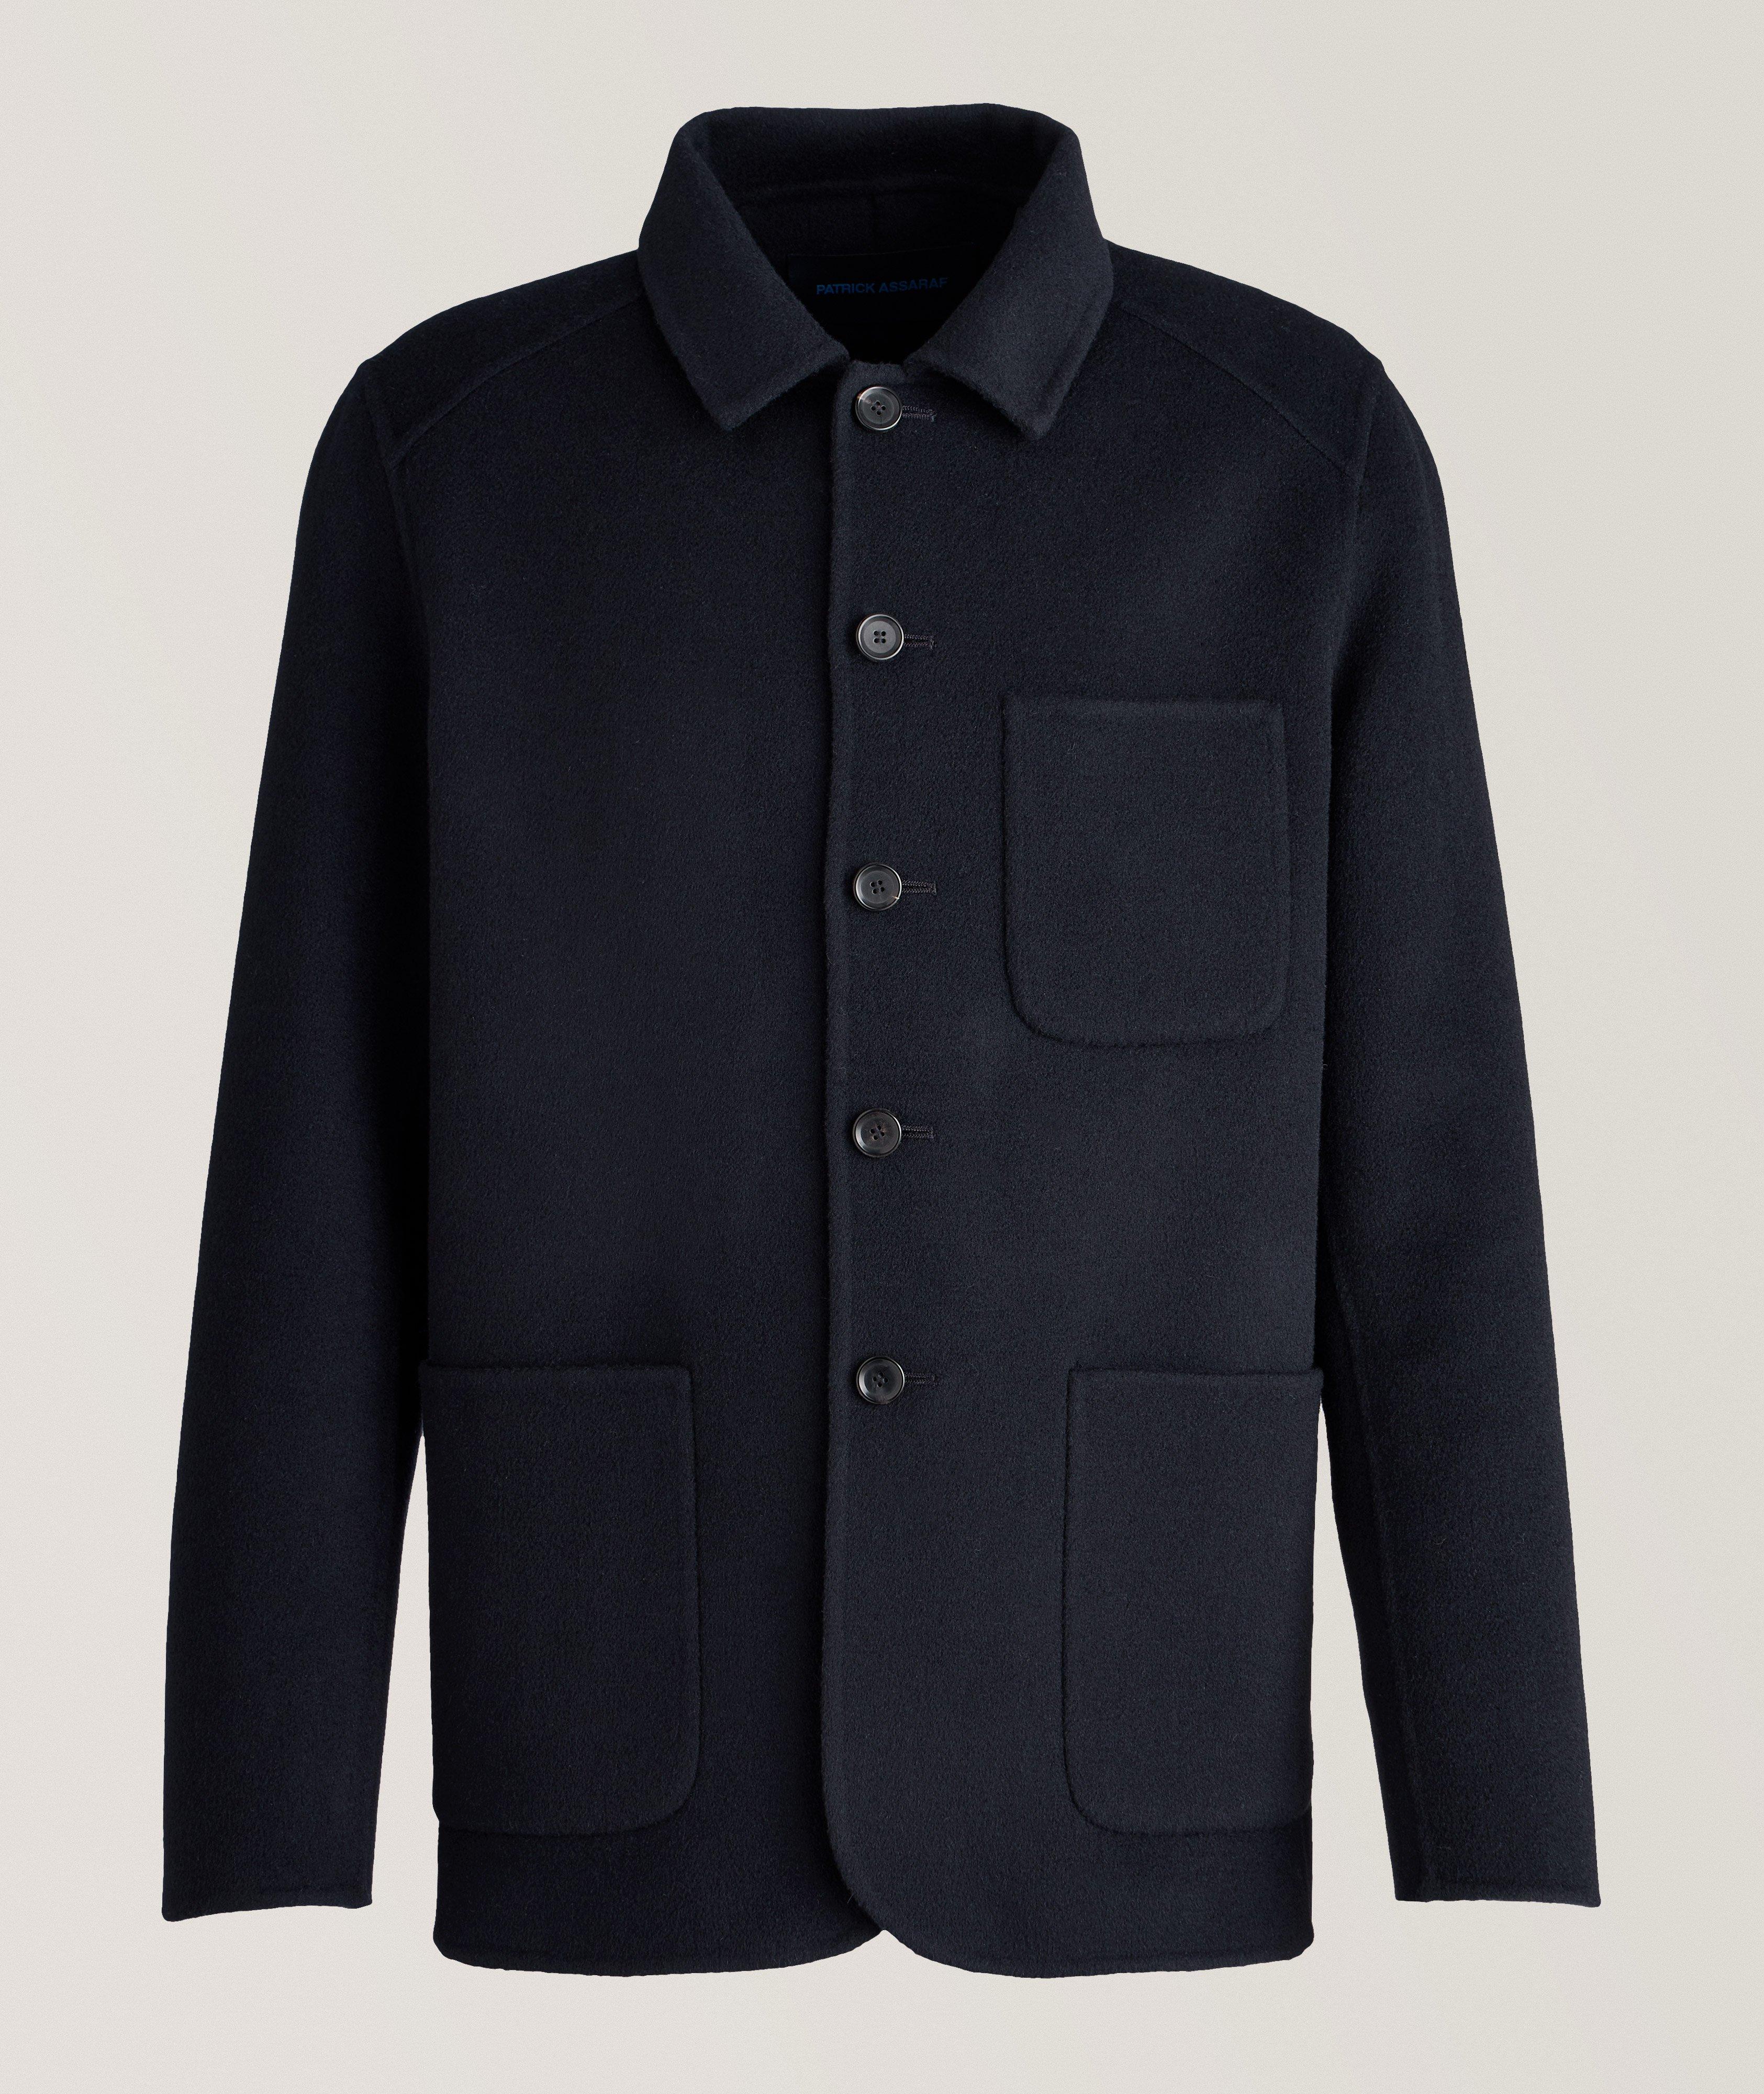 Wool-Cashmere Chore Jacket